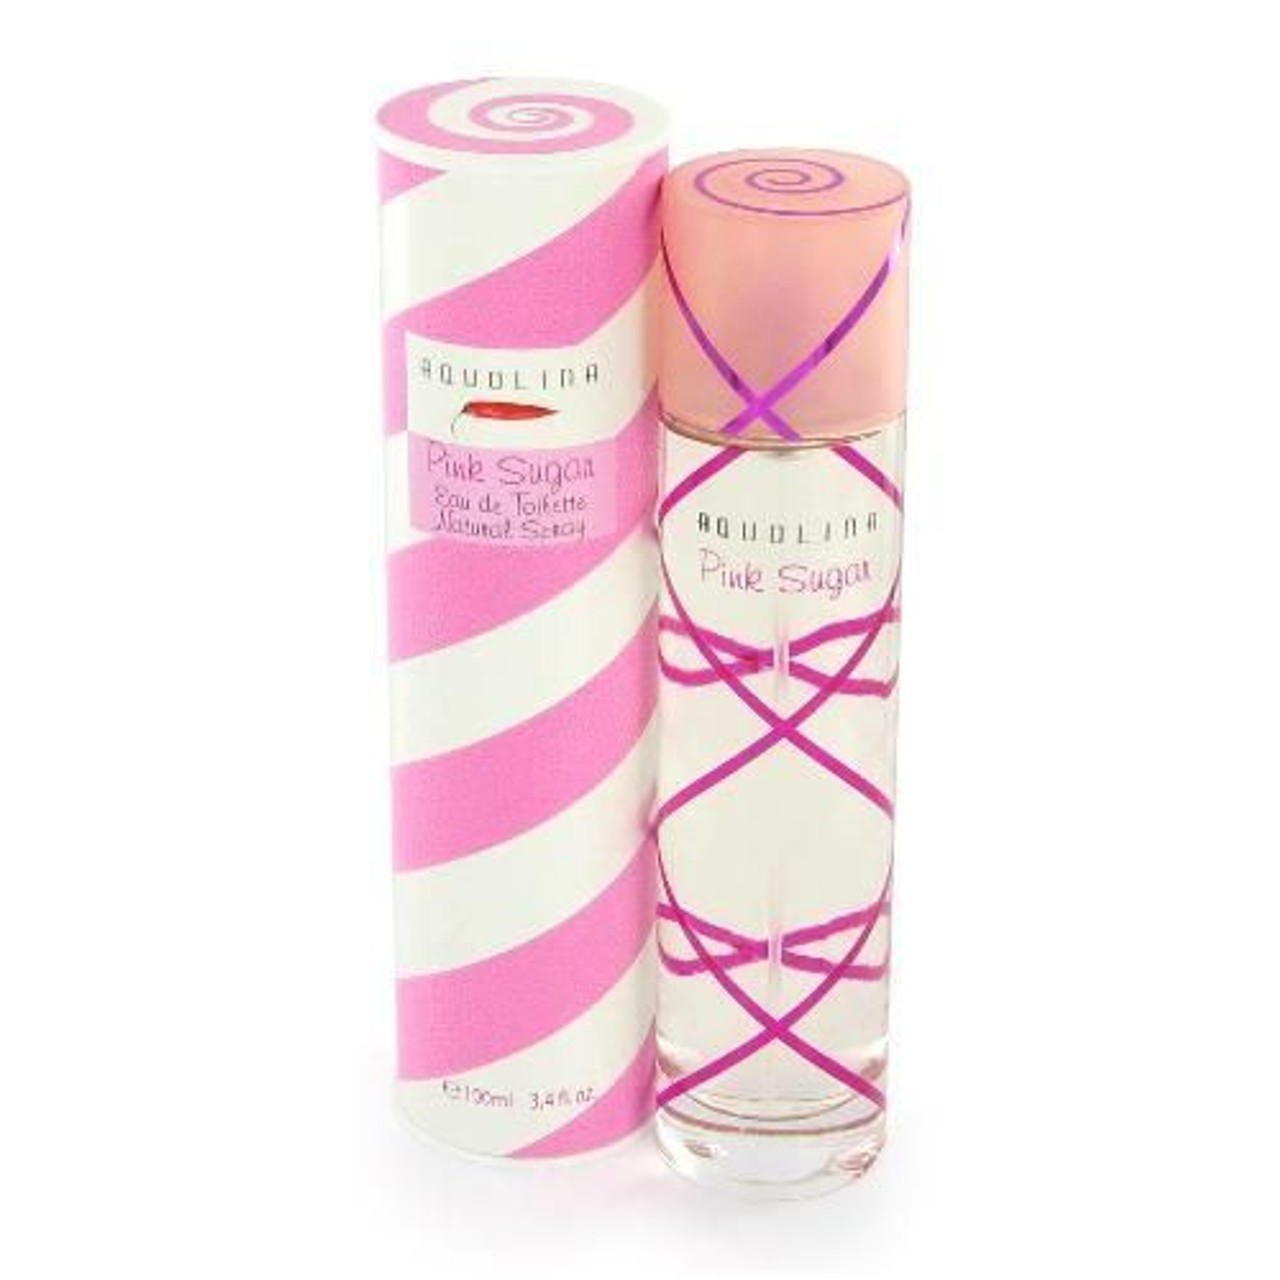 Aquolina Pink Sugar Women's EDT Spray - 3.4 fl oz can